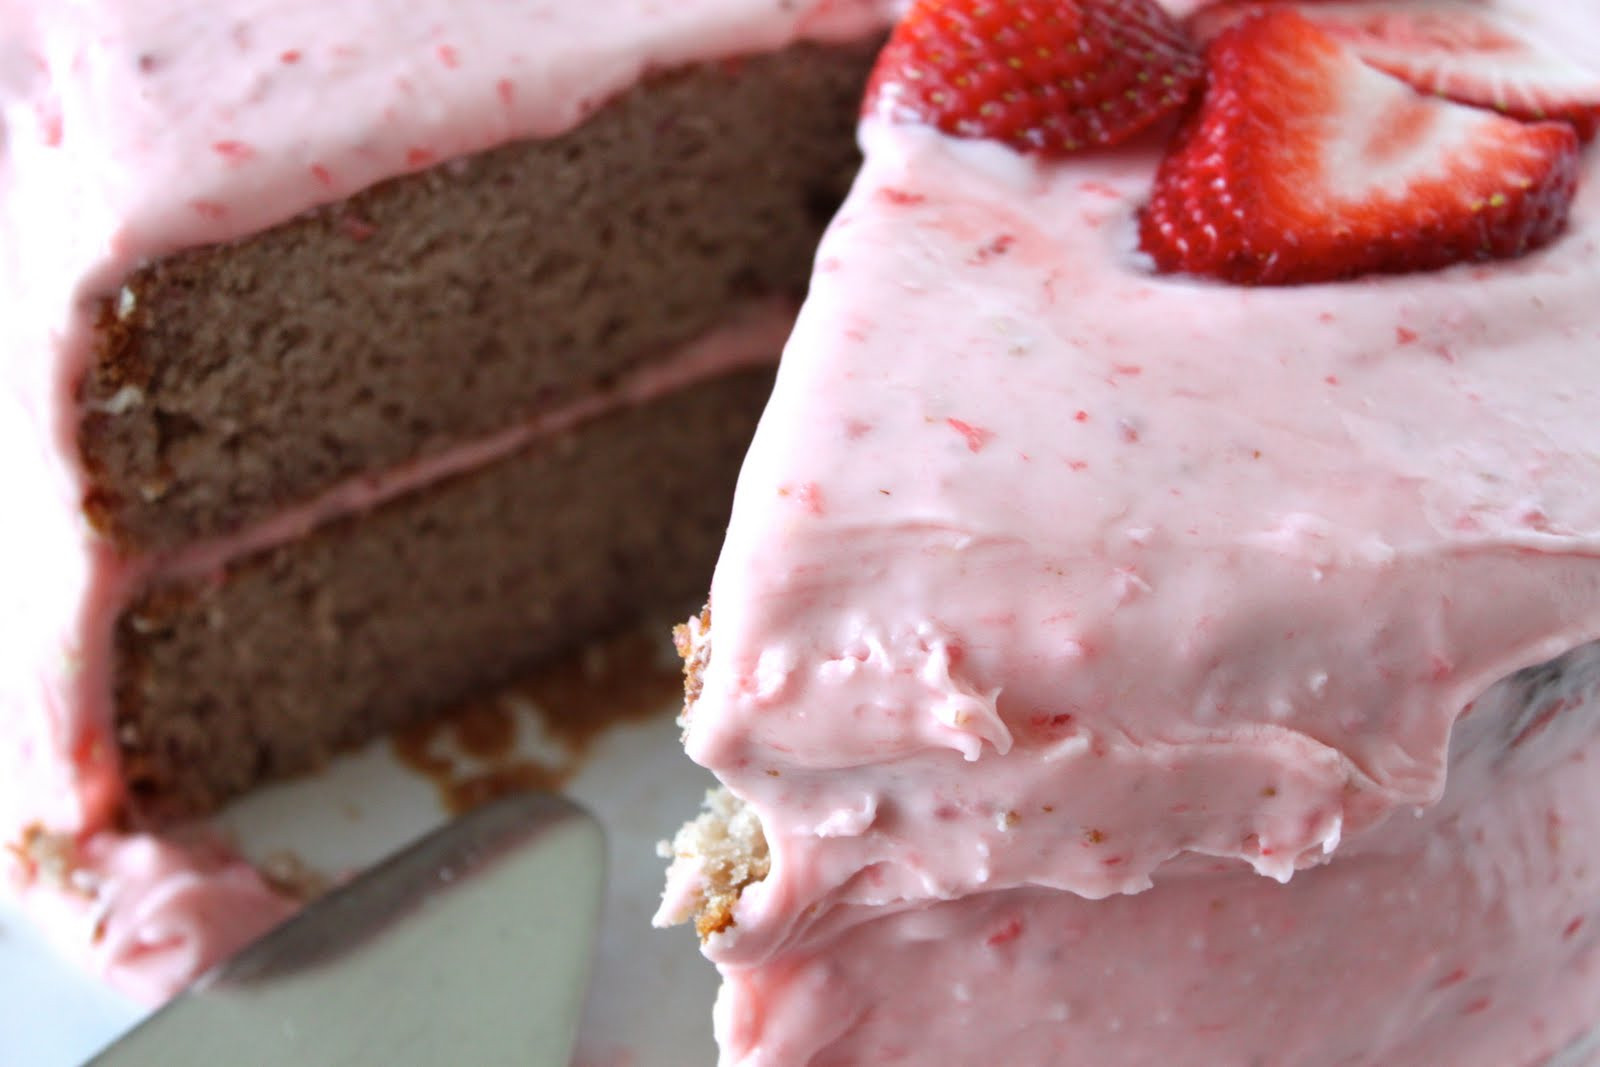 Best ideas about Strawberry Birthday Cake
. Save or Pin Brookie s Fresh Strawberry Birthday Cake Now.